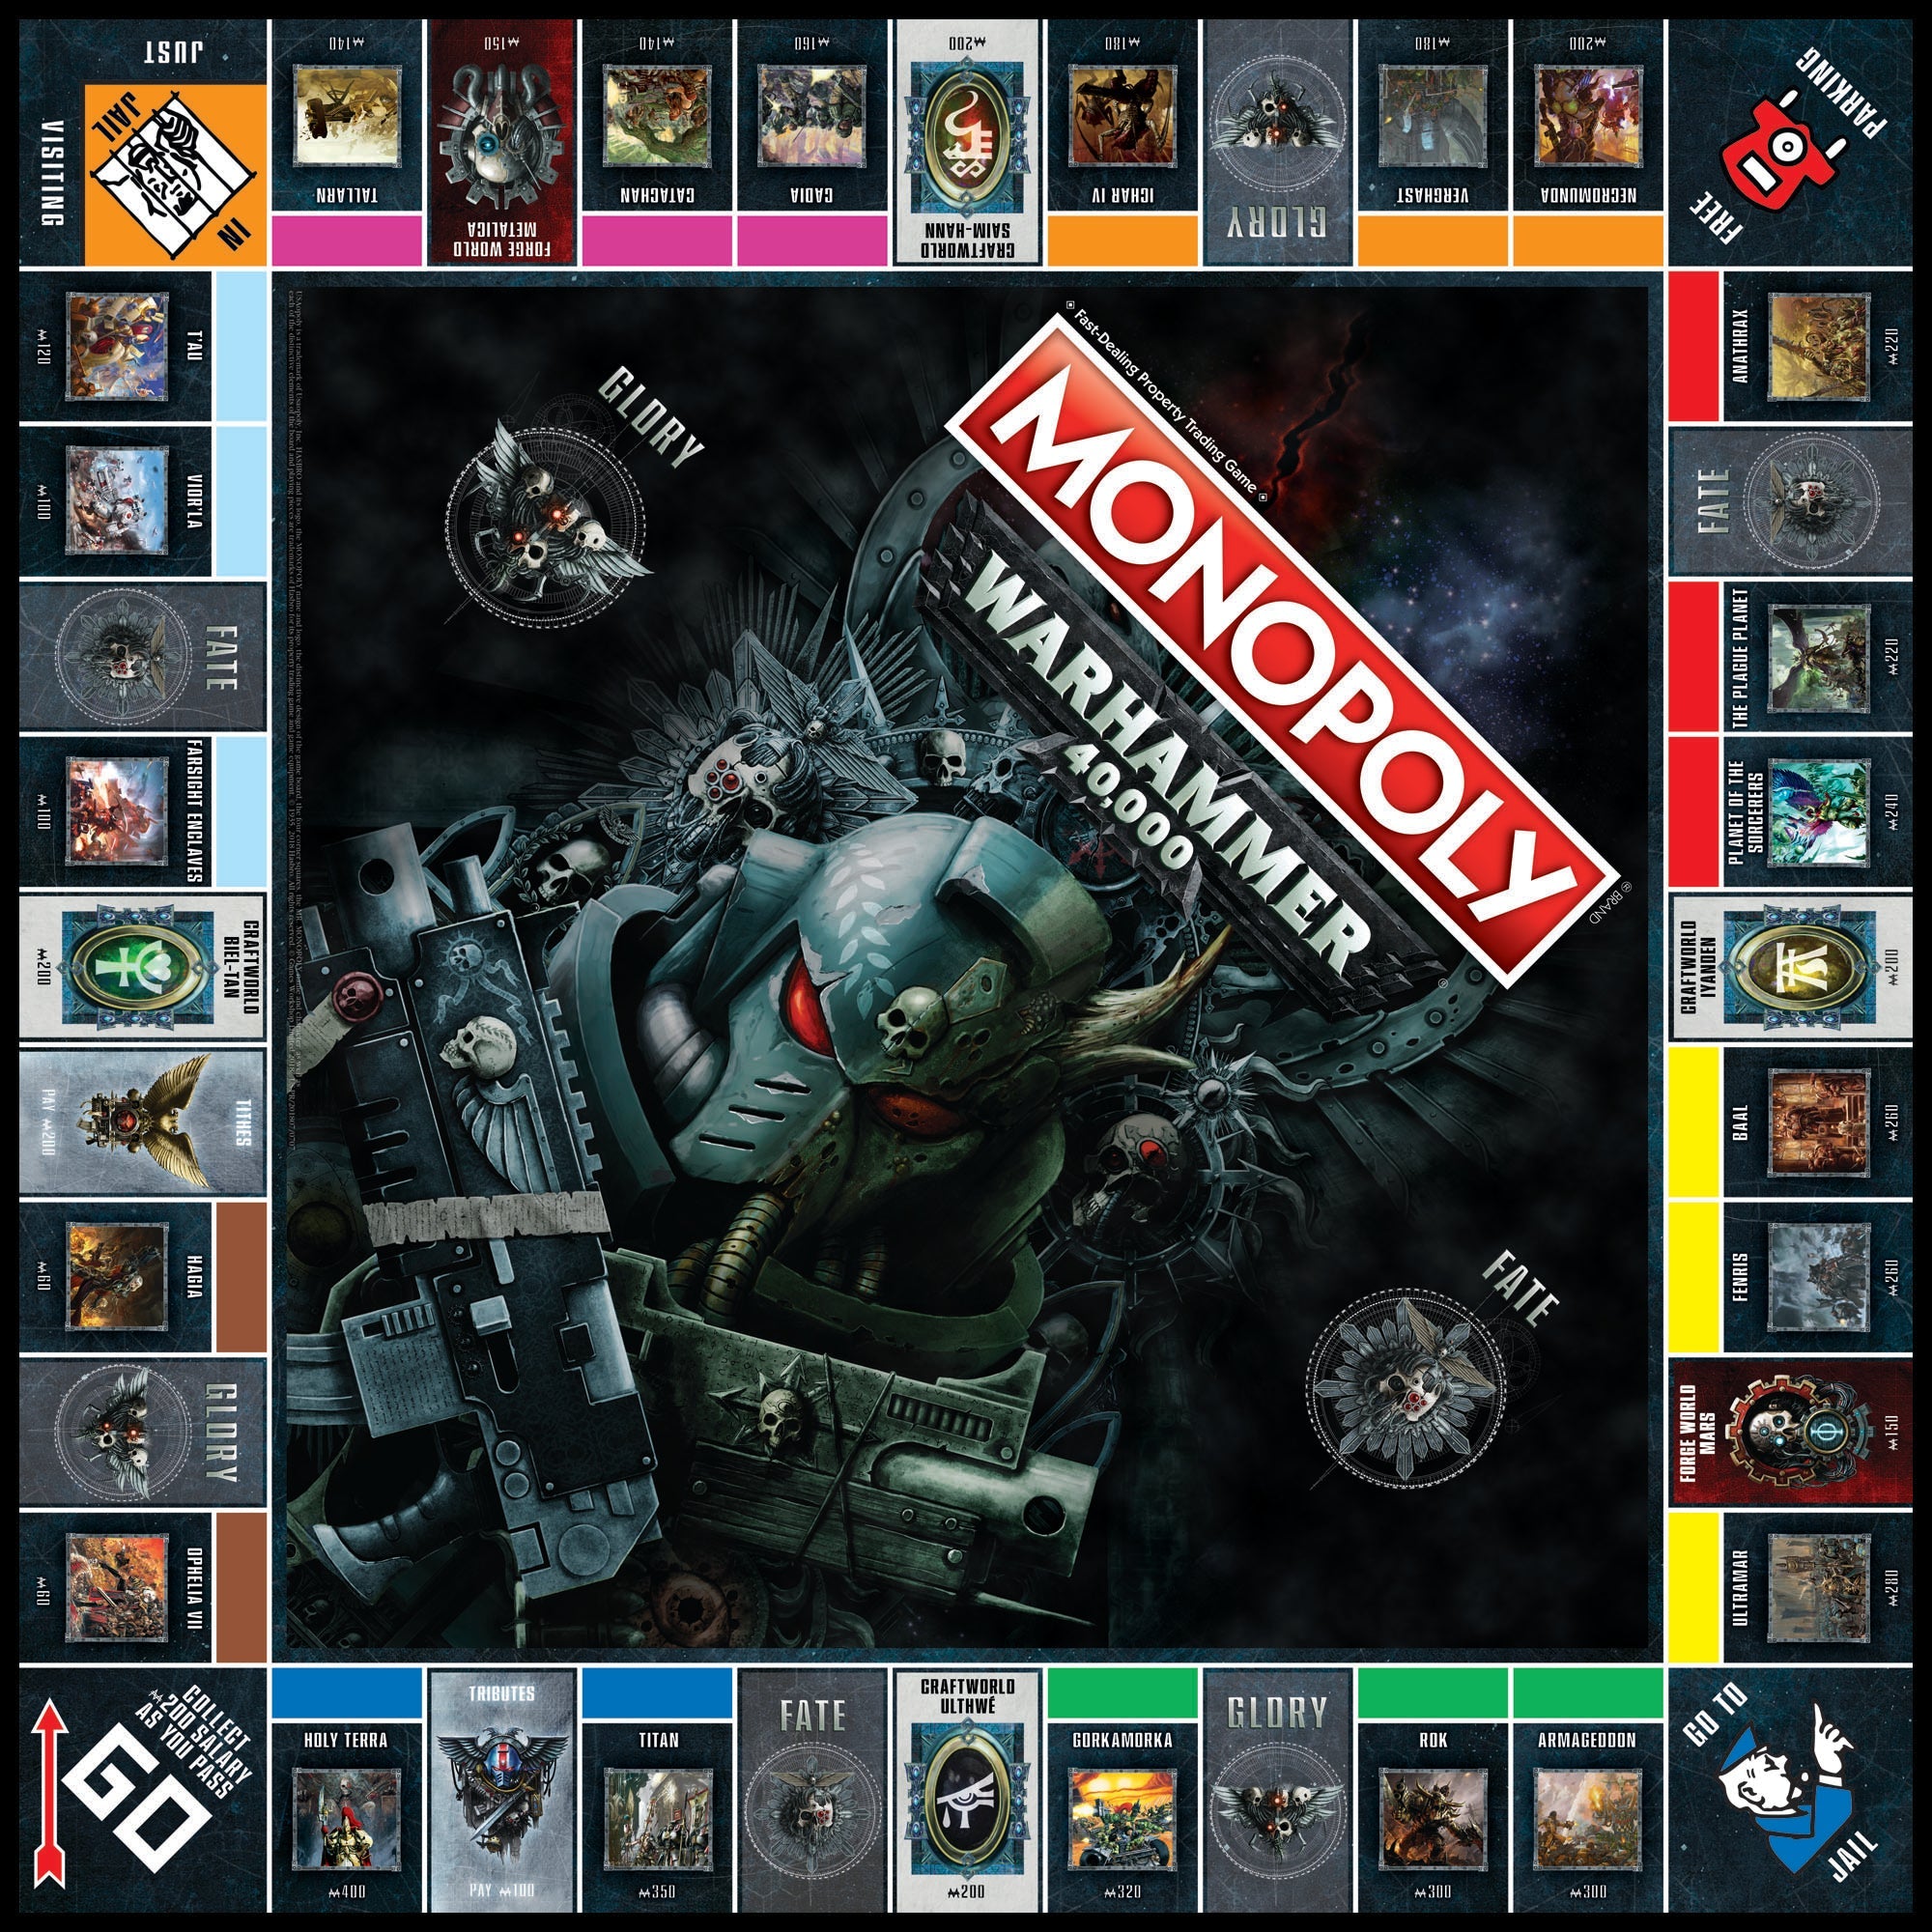 MONOPOLY Warhammer 40,000